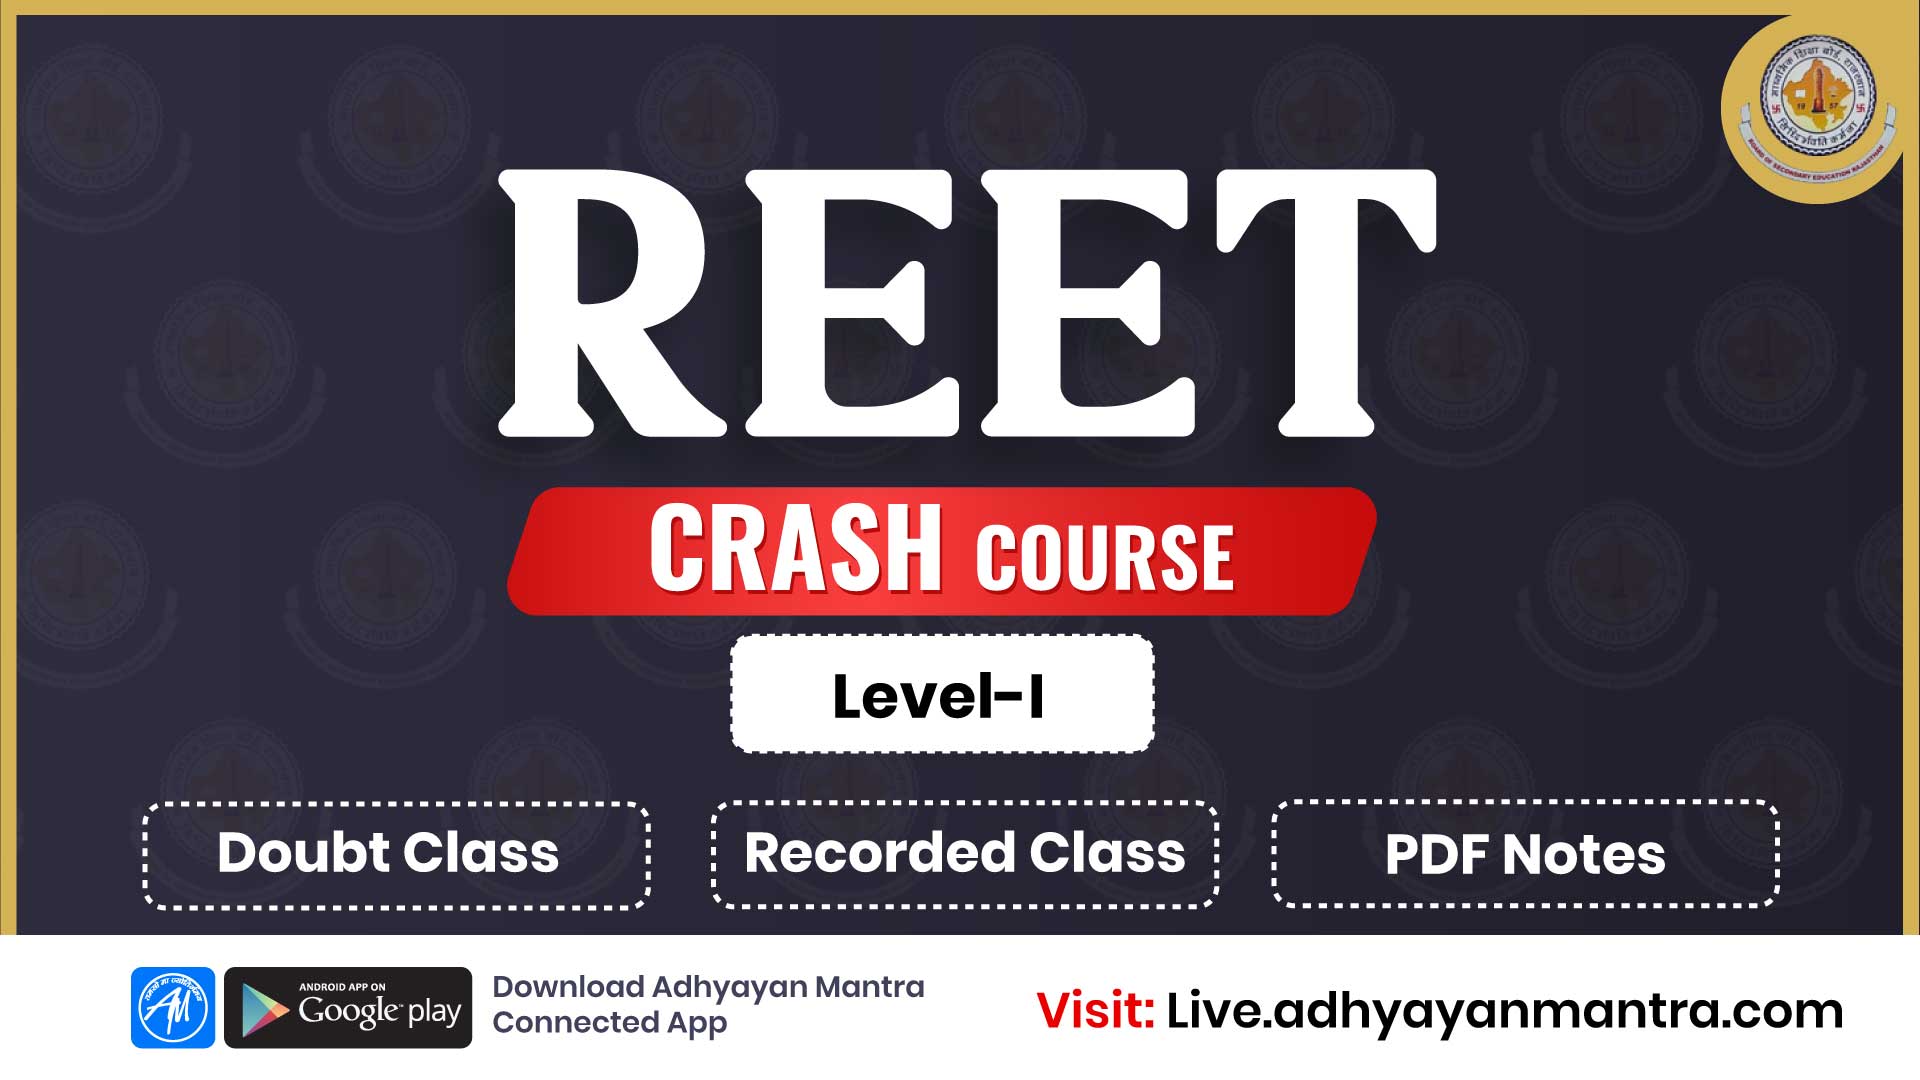 reet_crash_course.jpg